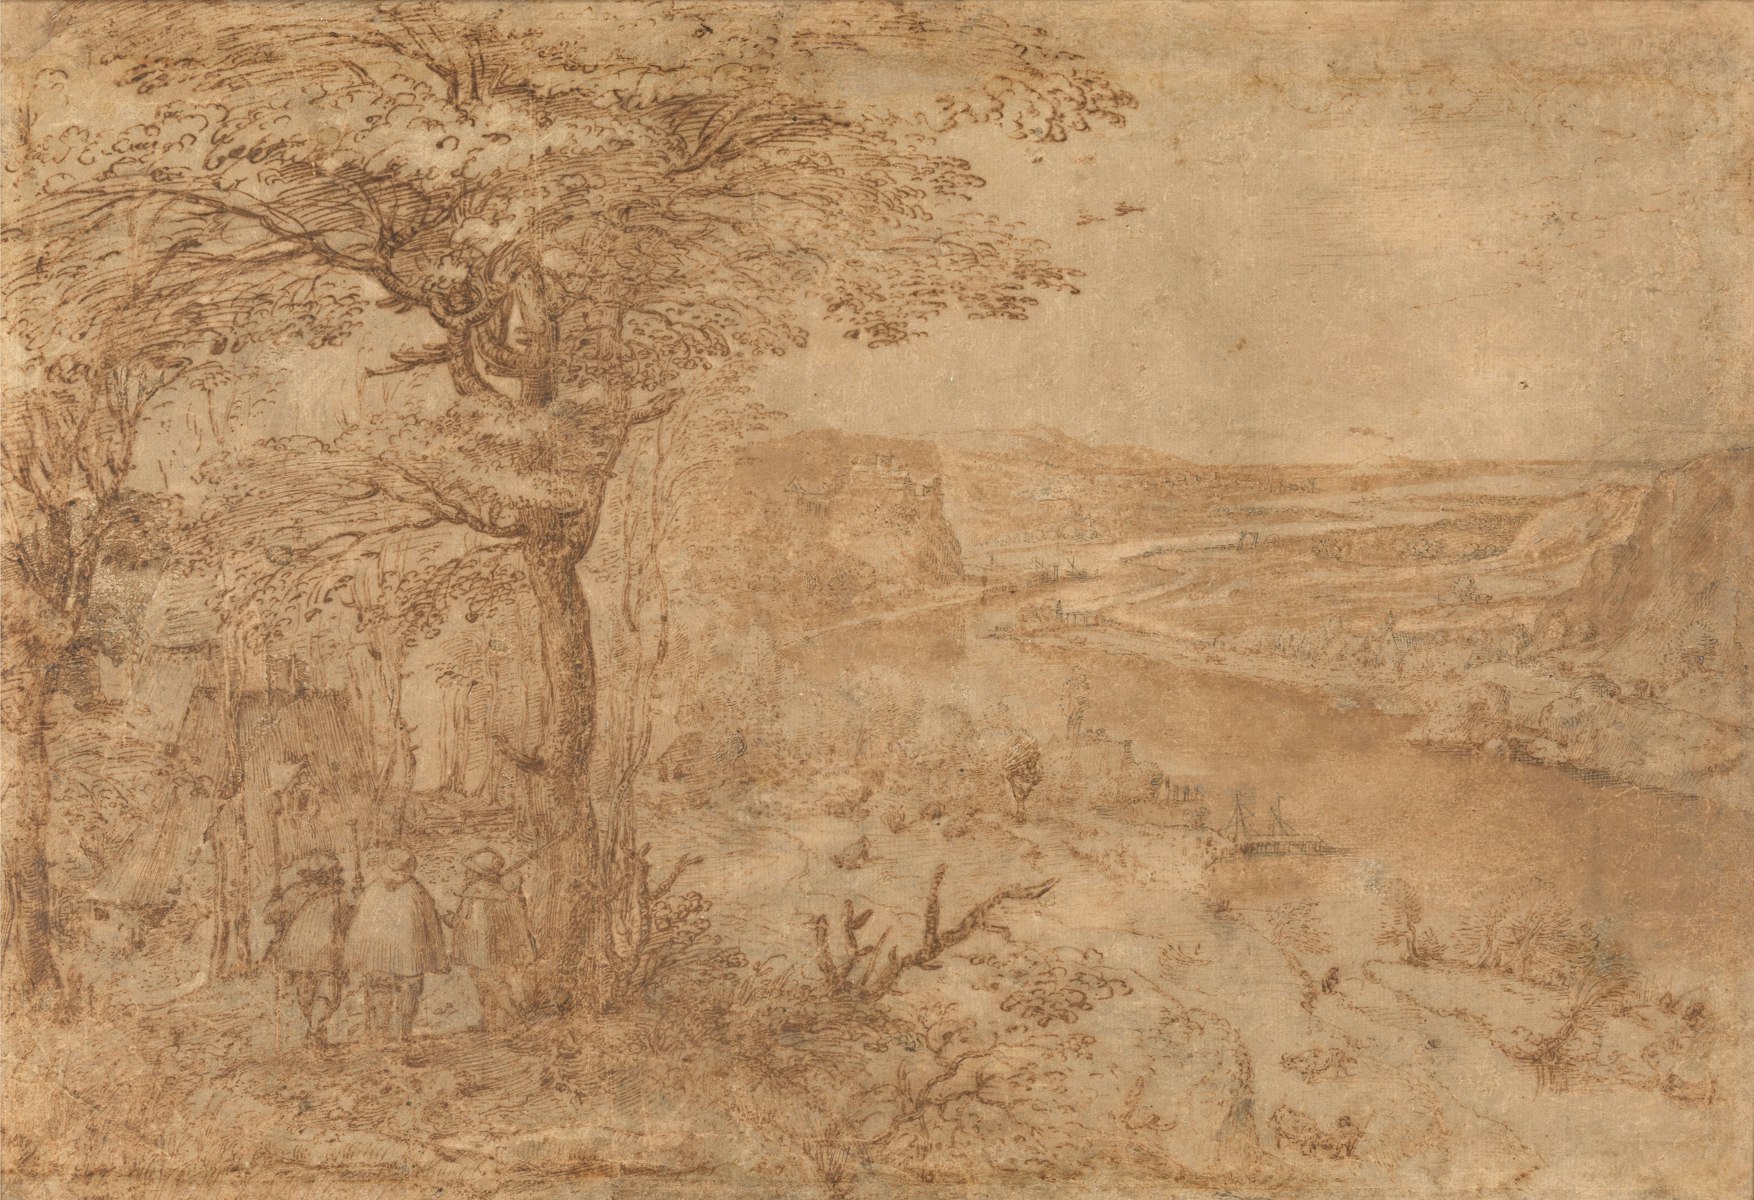 Pieter Bruegel the Elder, Hilly landscape with Three Pelgrims